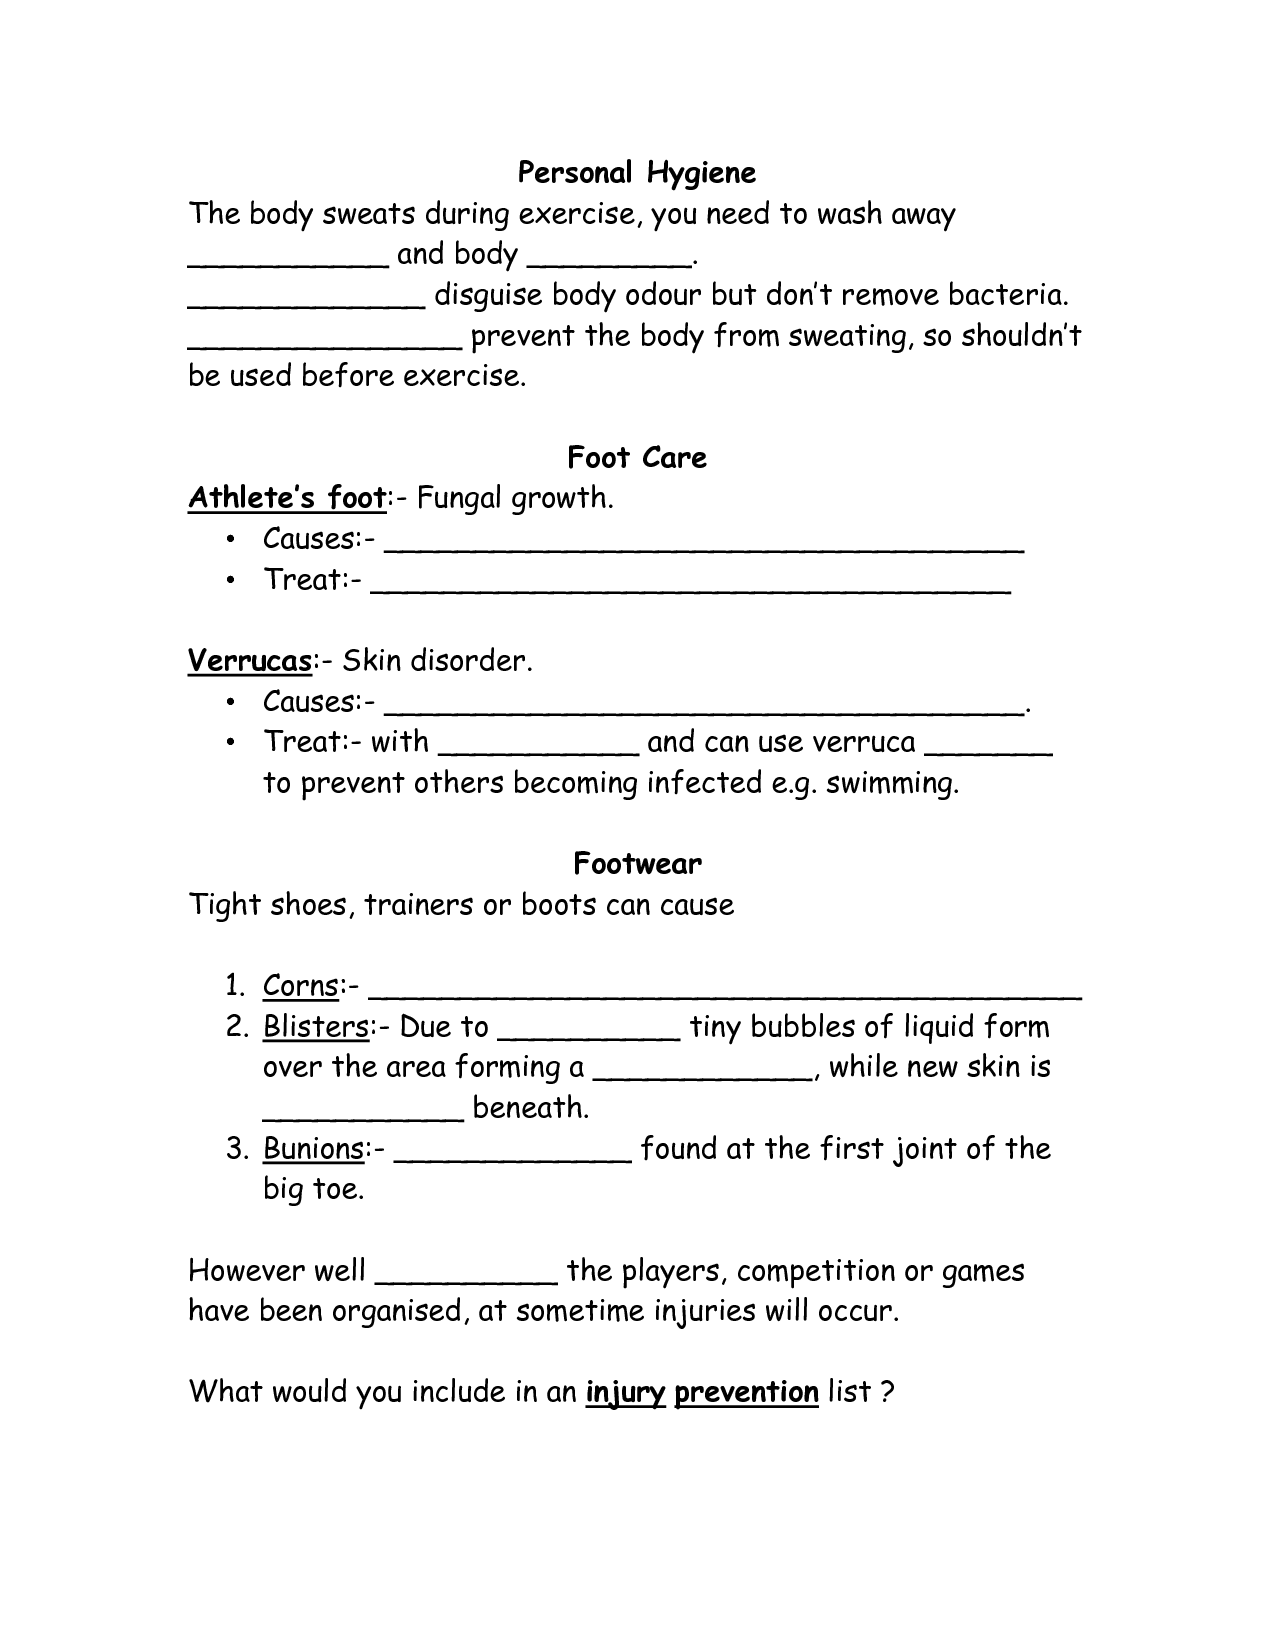 Personal Hygiene Worksheets Image